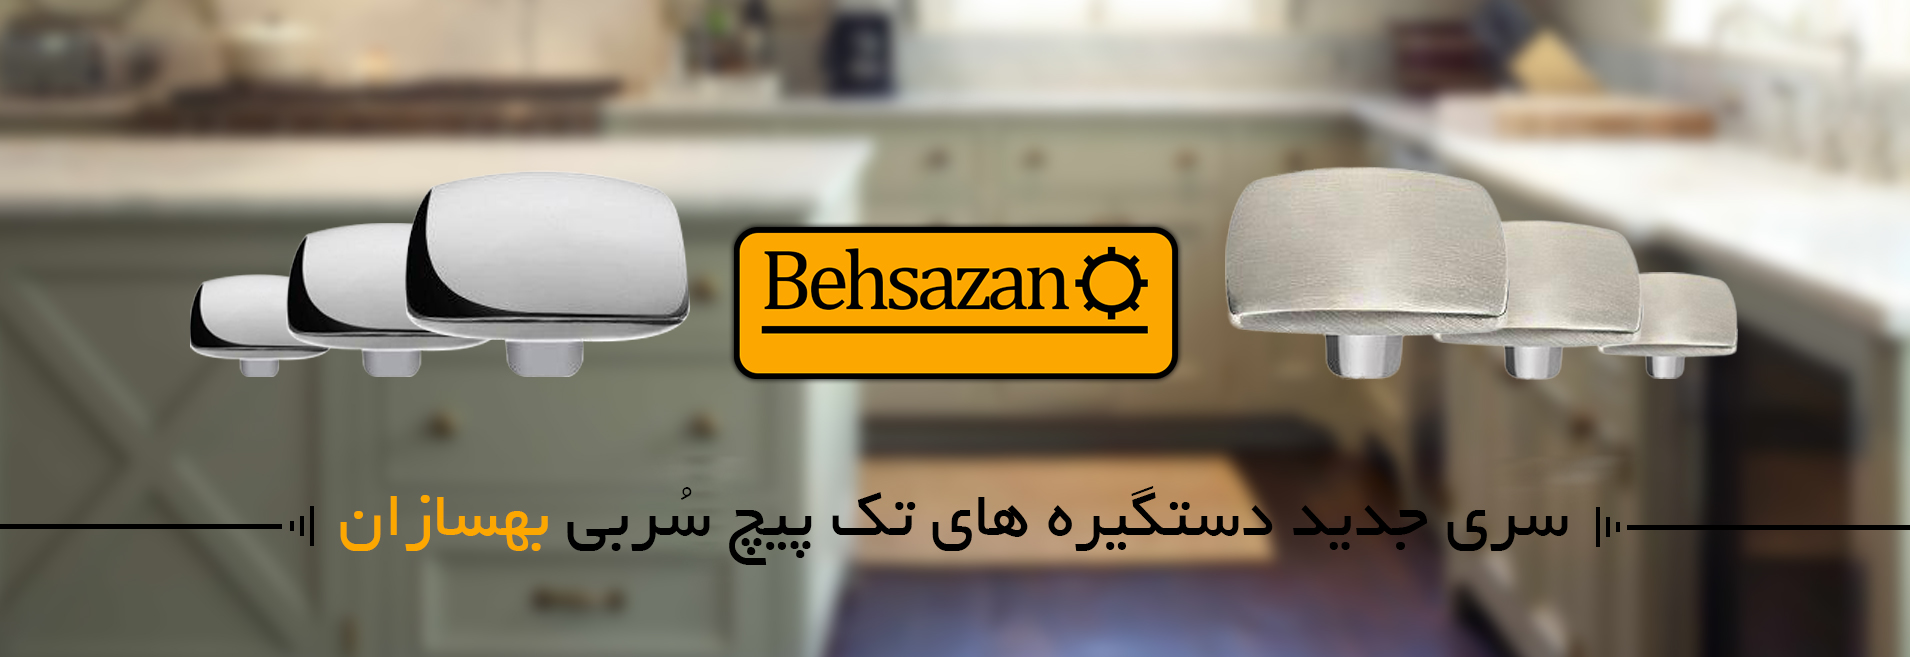 Behsazan-Slider-2N